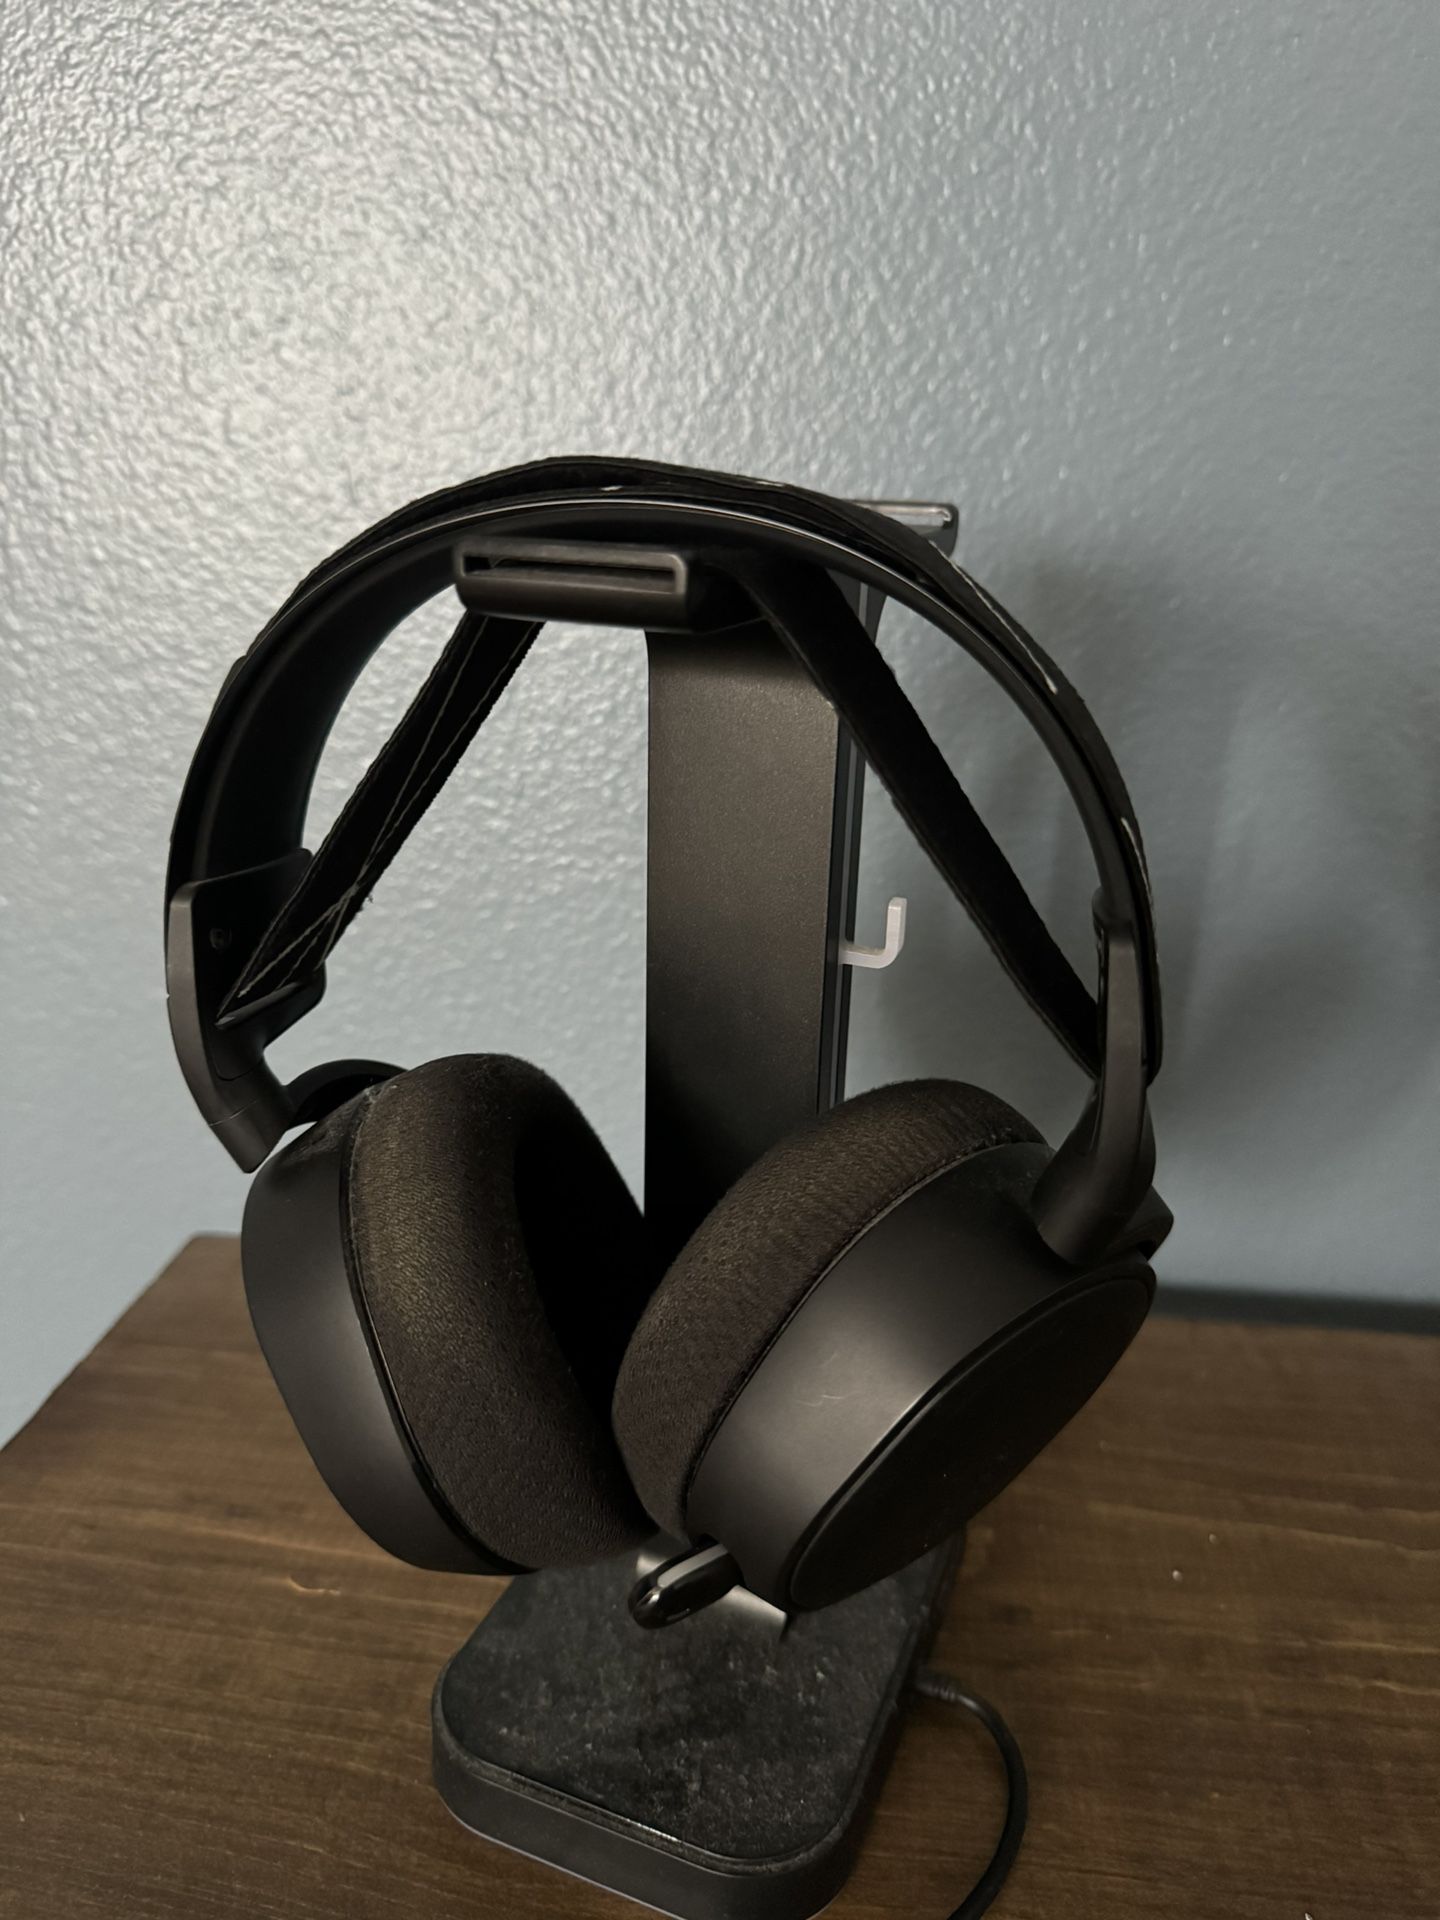 Steel Series Arctis 9 Wireless Headset